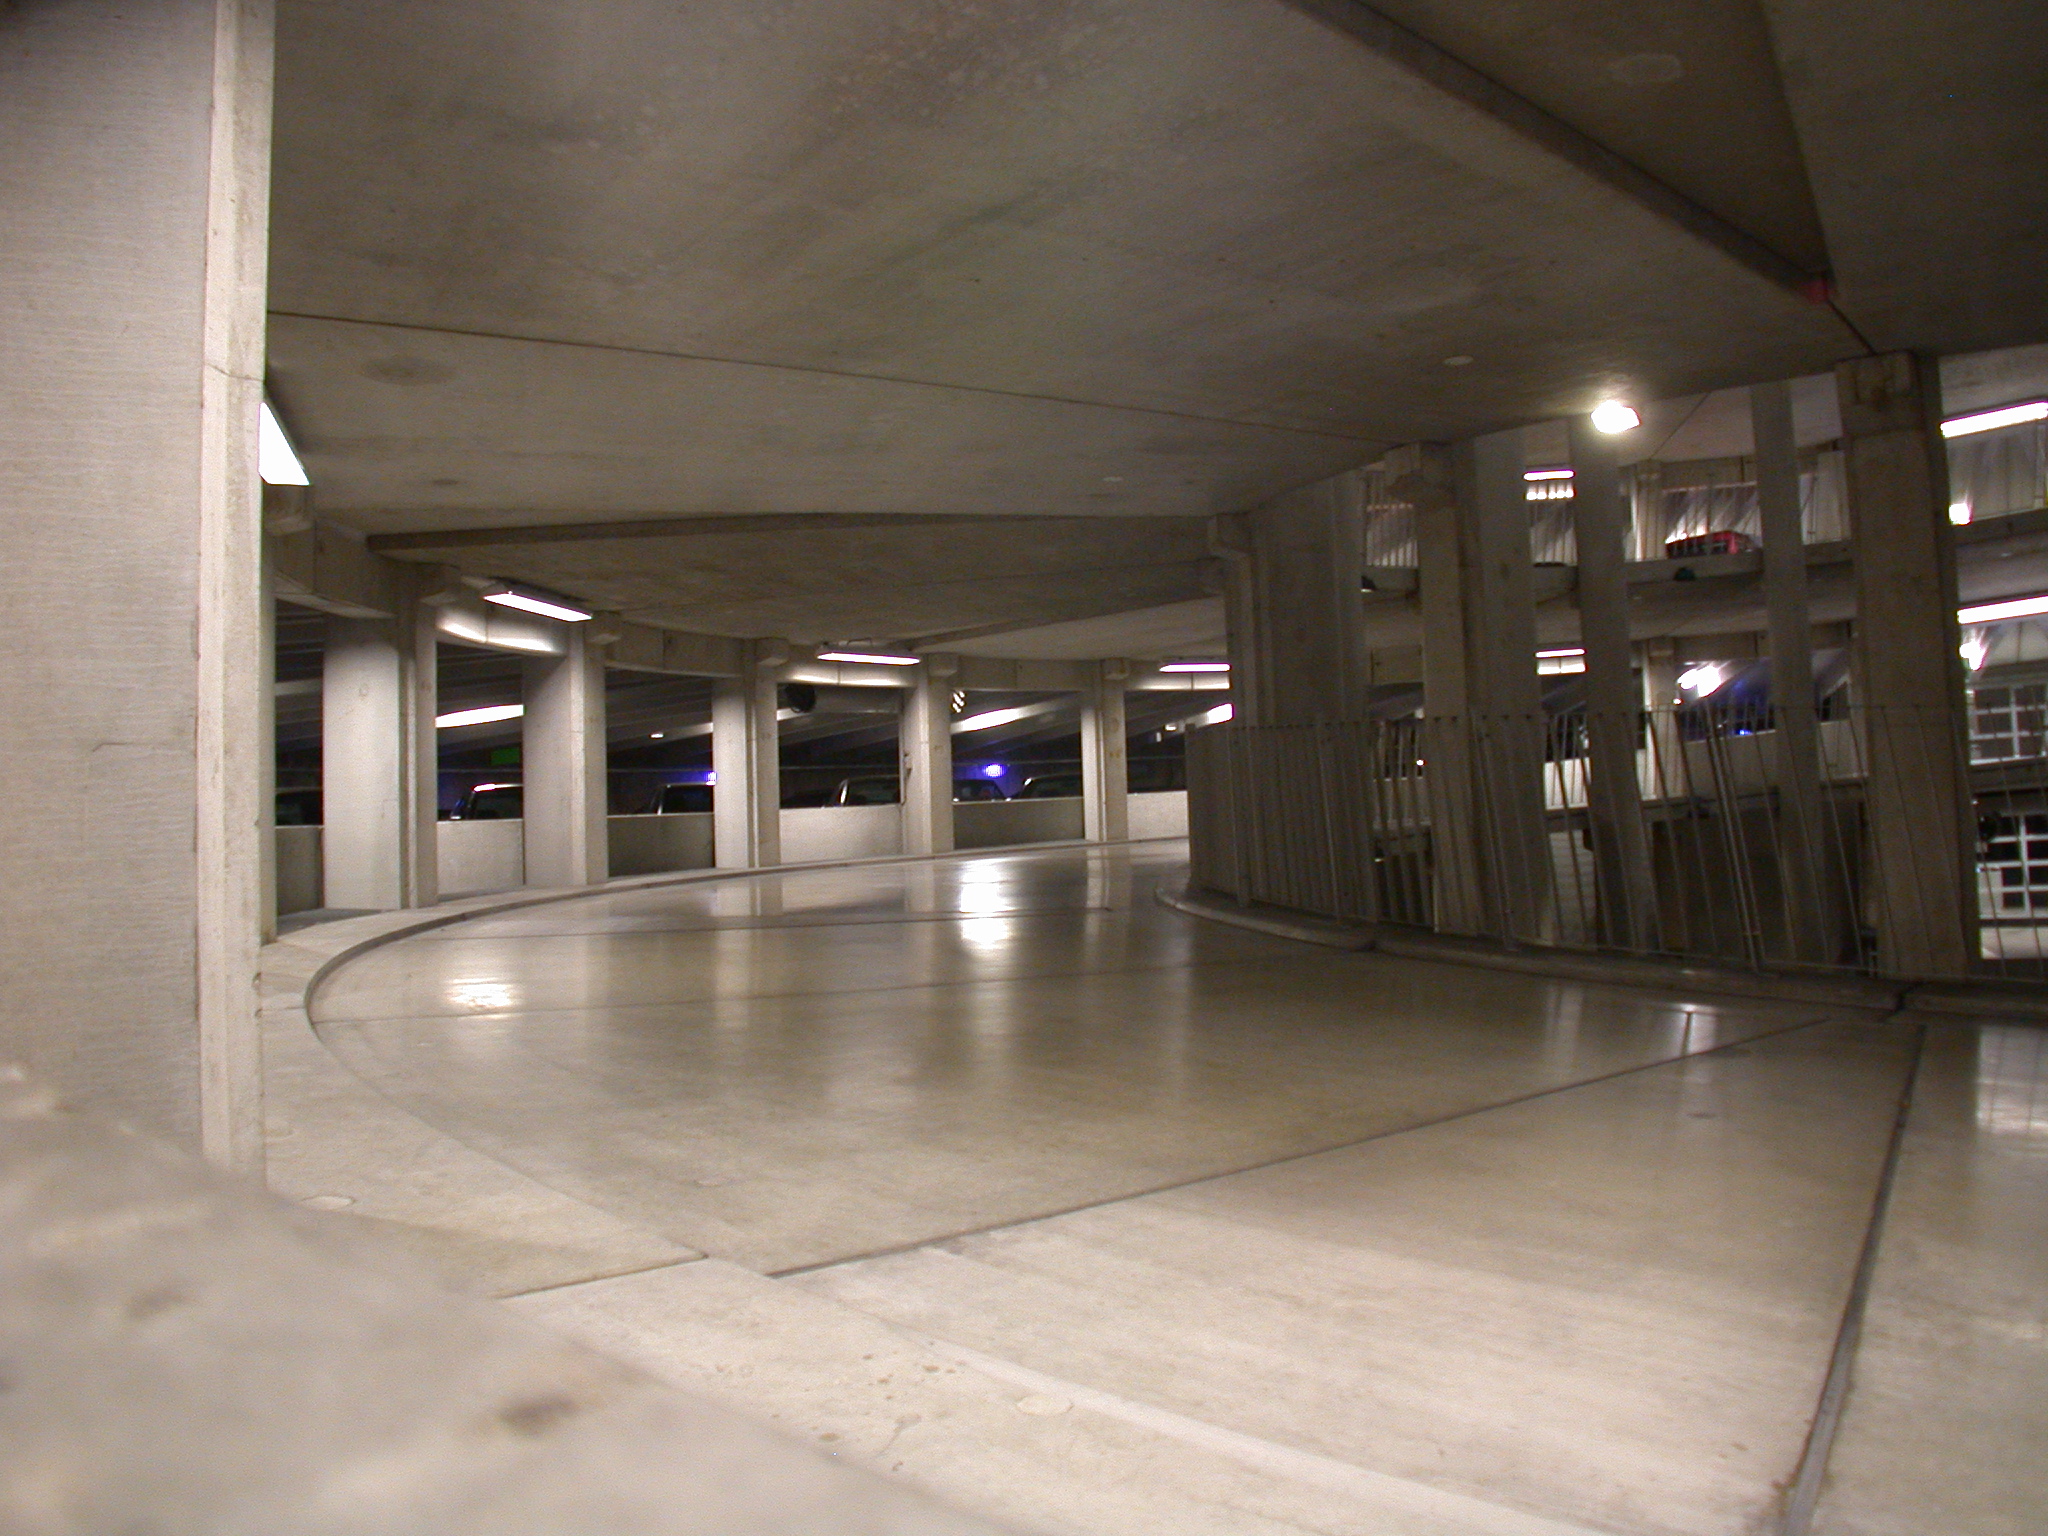 car park carpark parking floor empty space columns slippery floor glossy